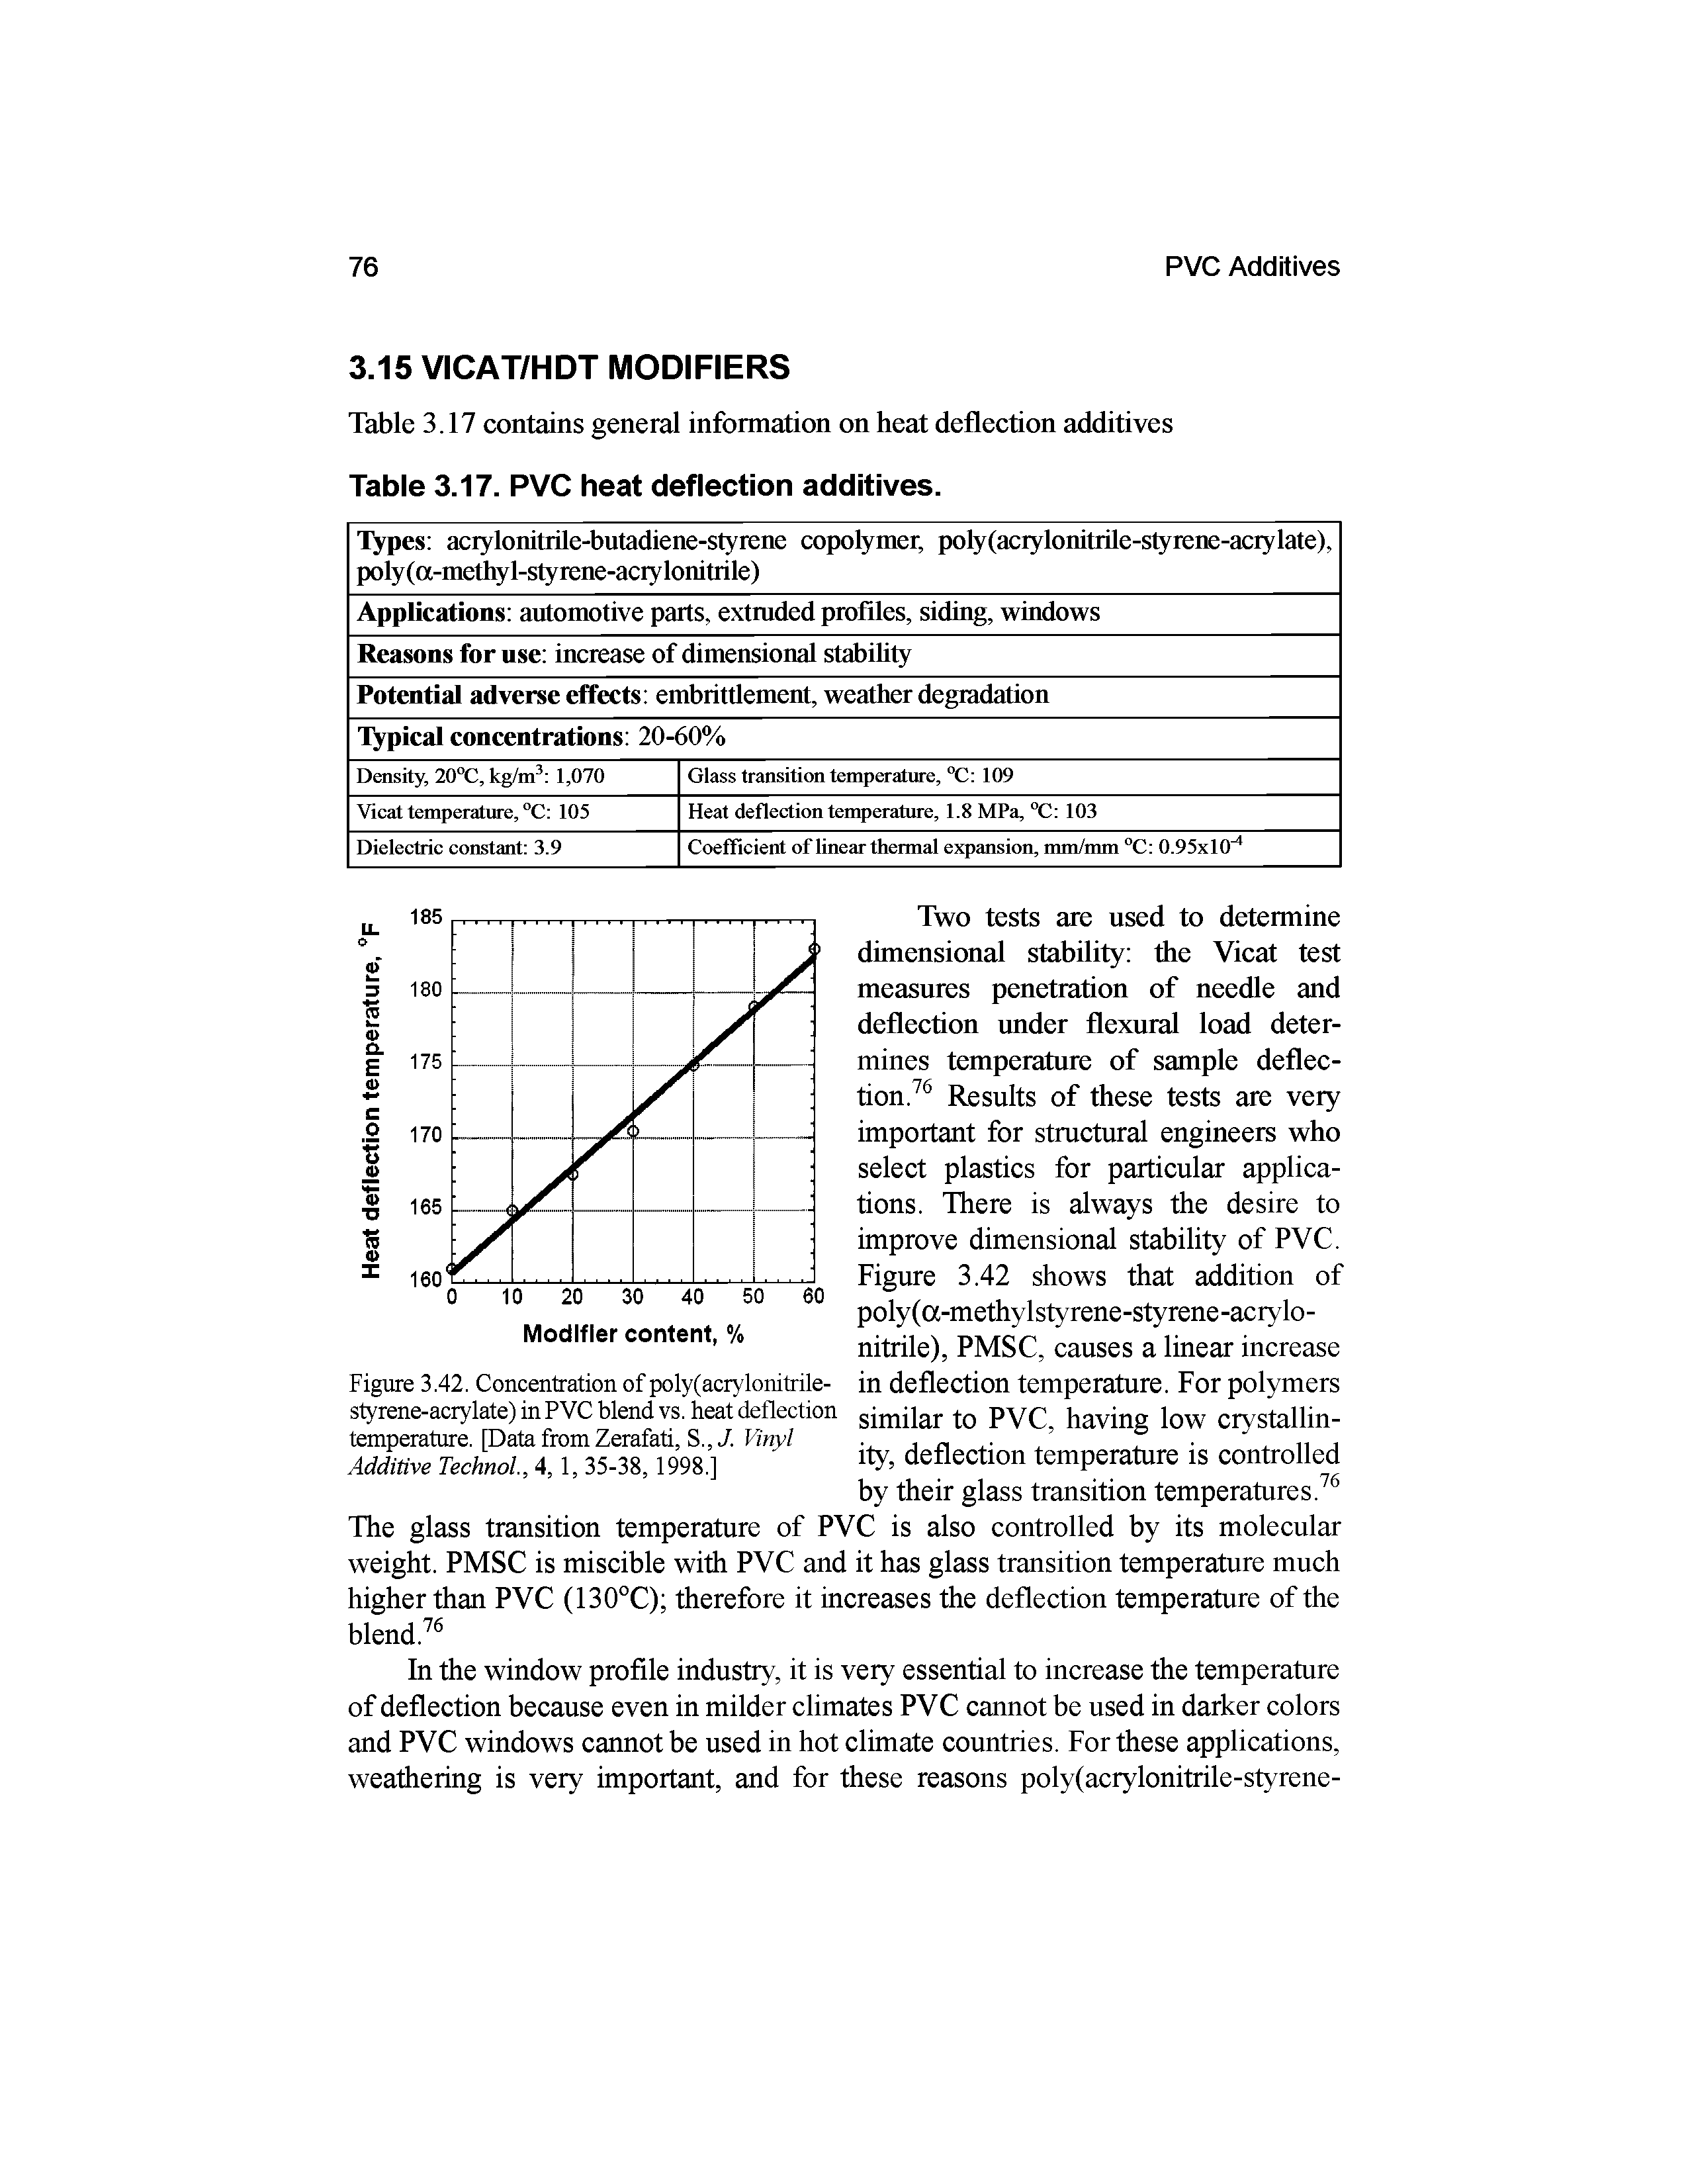 Figure 3.42. Concentration of poly(acrylonitrile-styrene-acrylate) in PVC blend vs. heat deflection temperature. [Data from Zerafati, S.,J. Vinyl Additive TechnoL, 4,1, 35-38,1998.]...